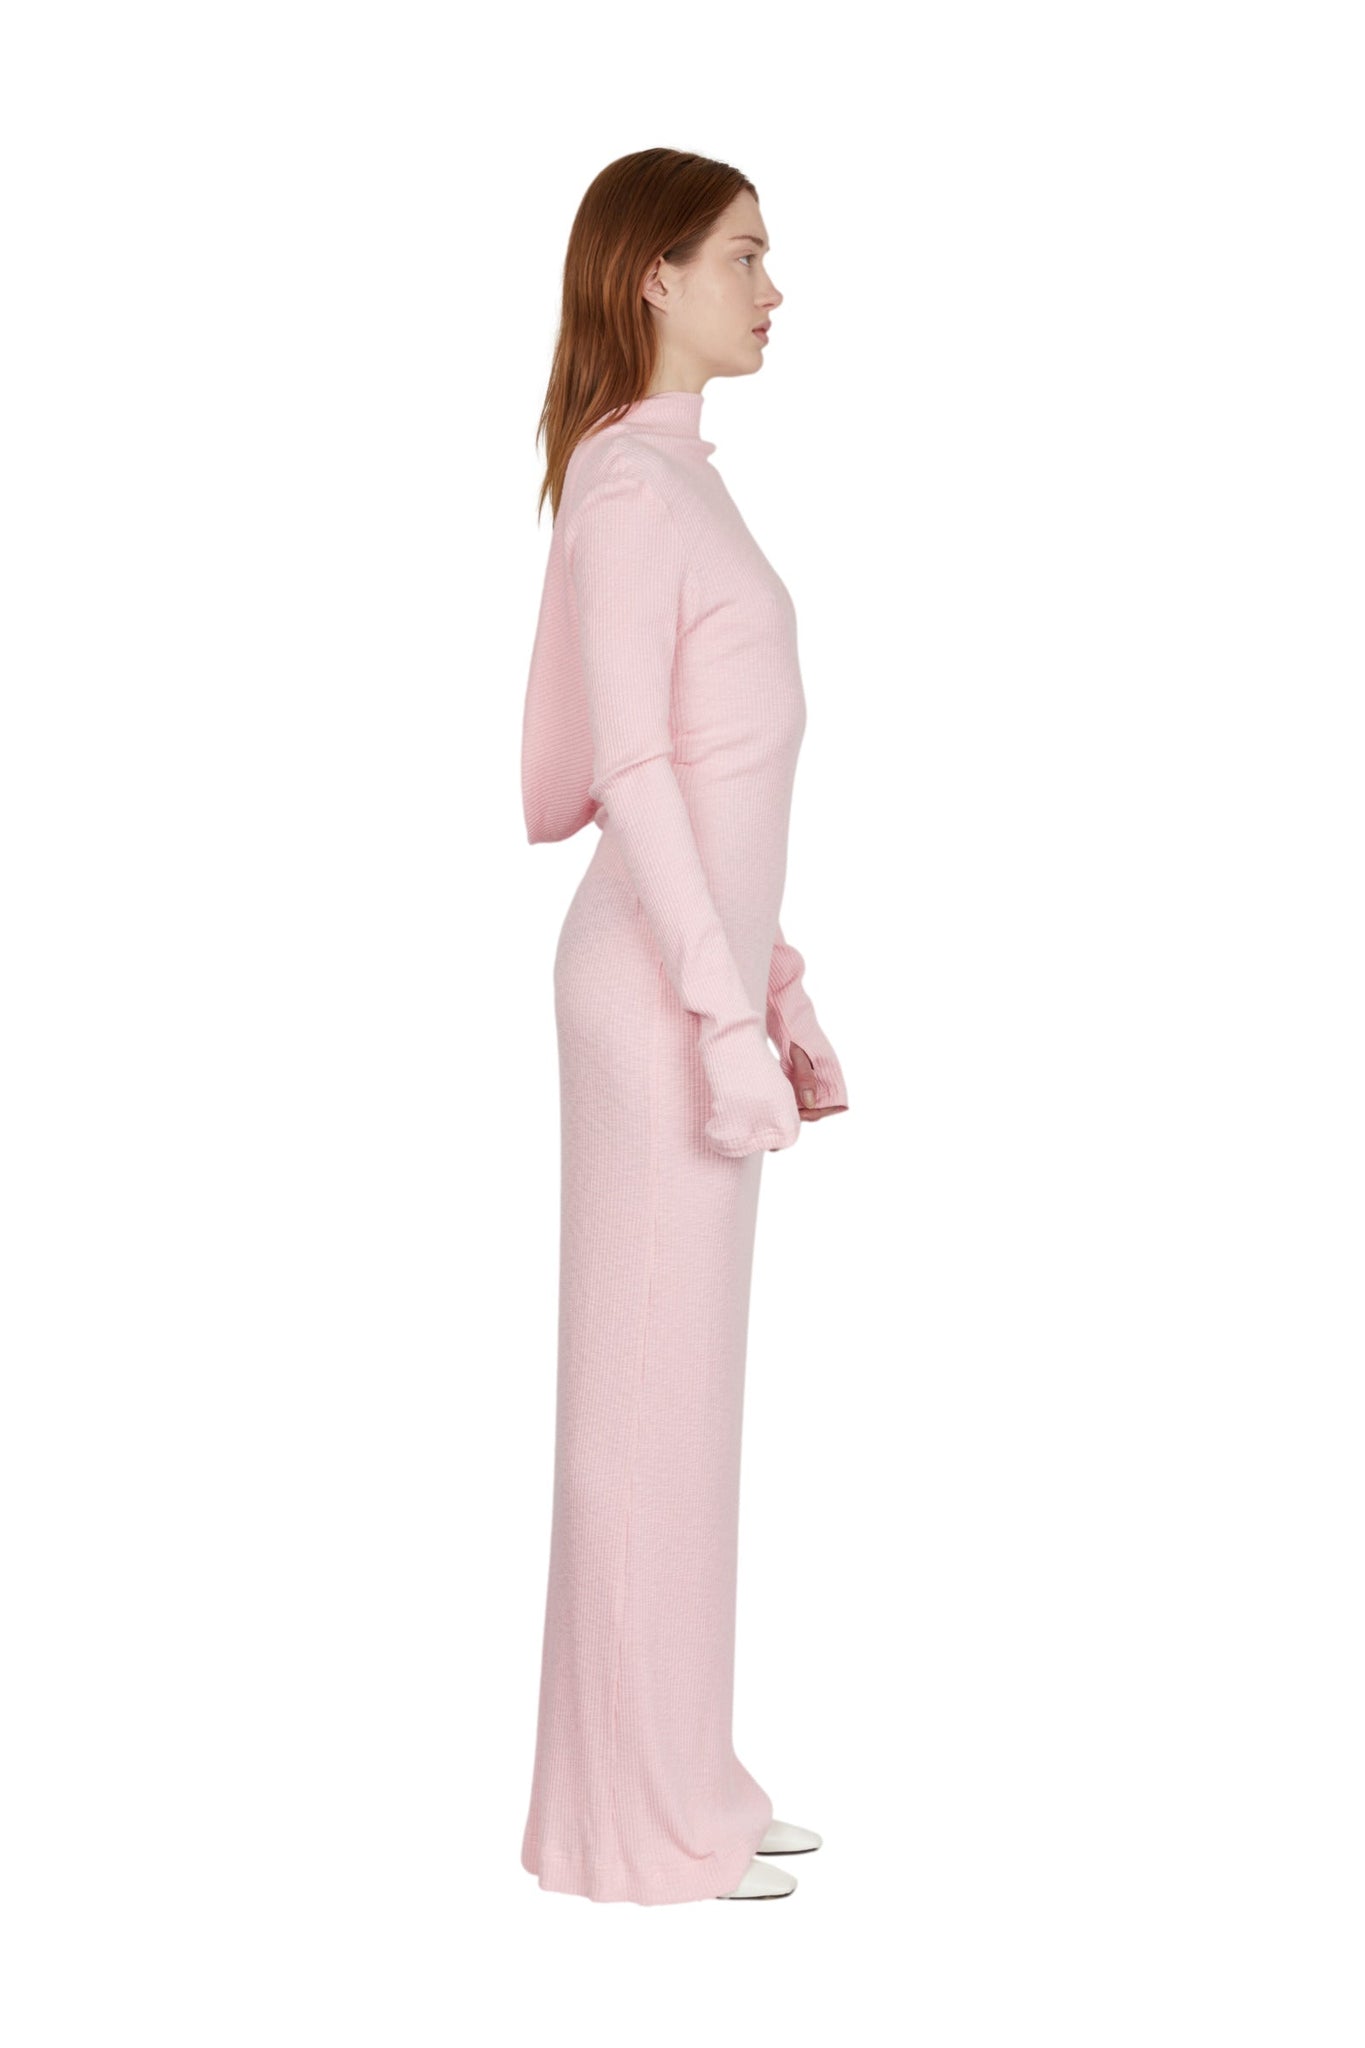 MAITREPIERRE  Louisa Dress Pink 